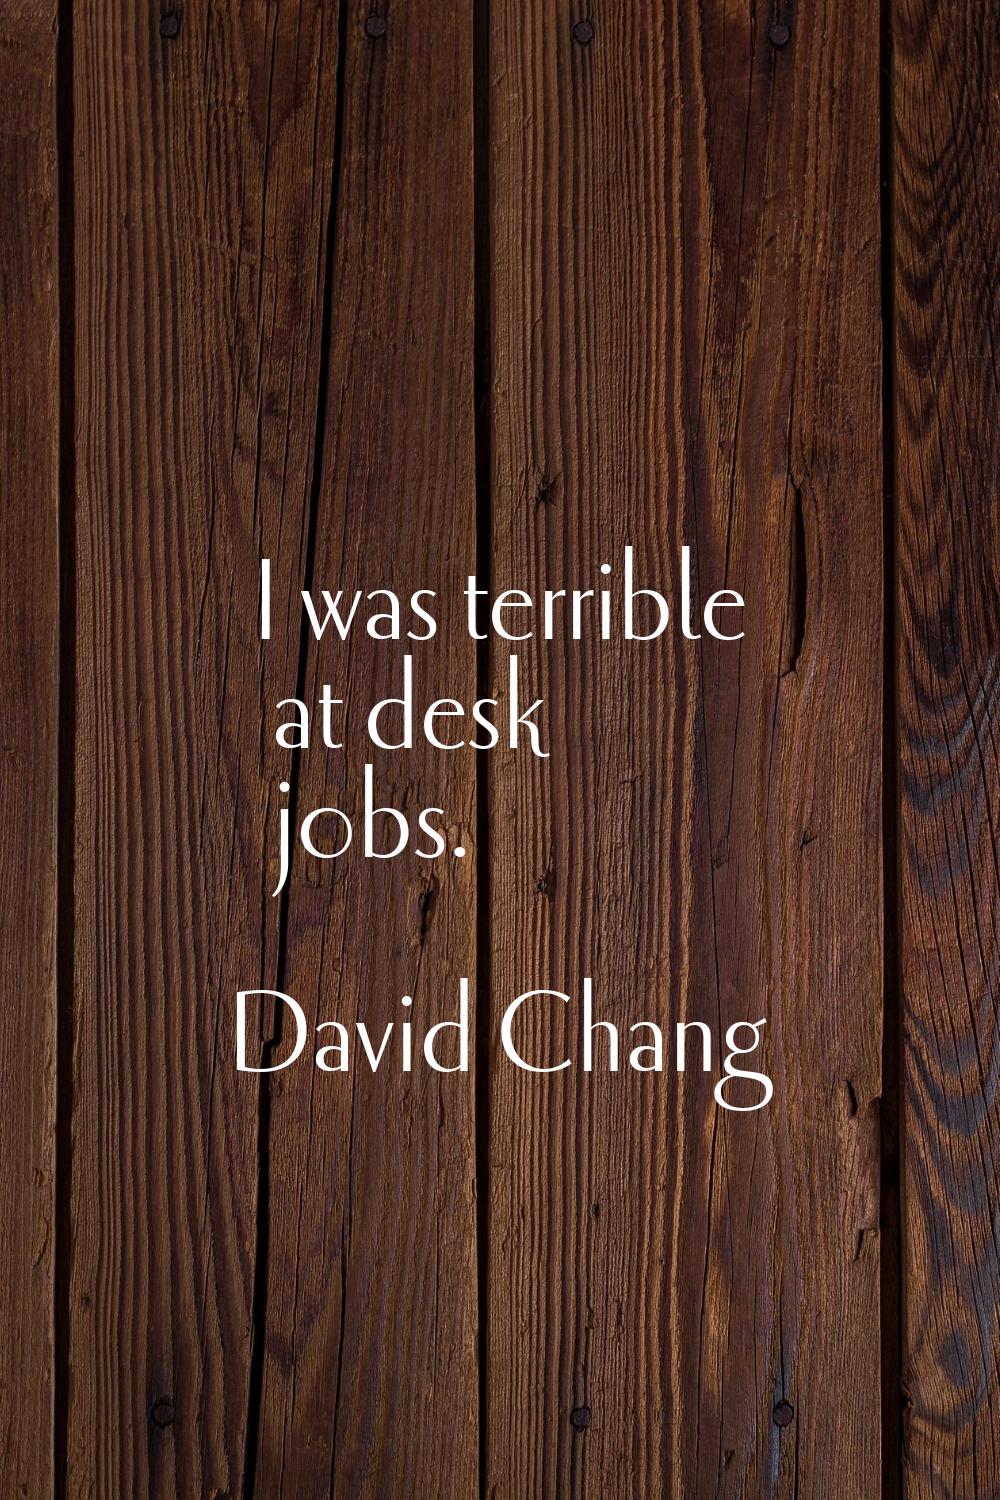 I was terrible at desk jobs.